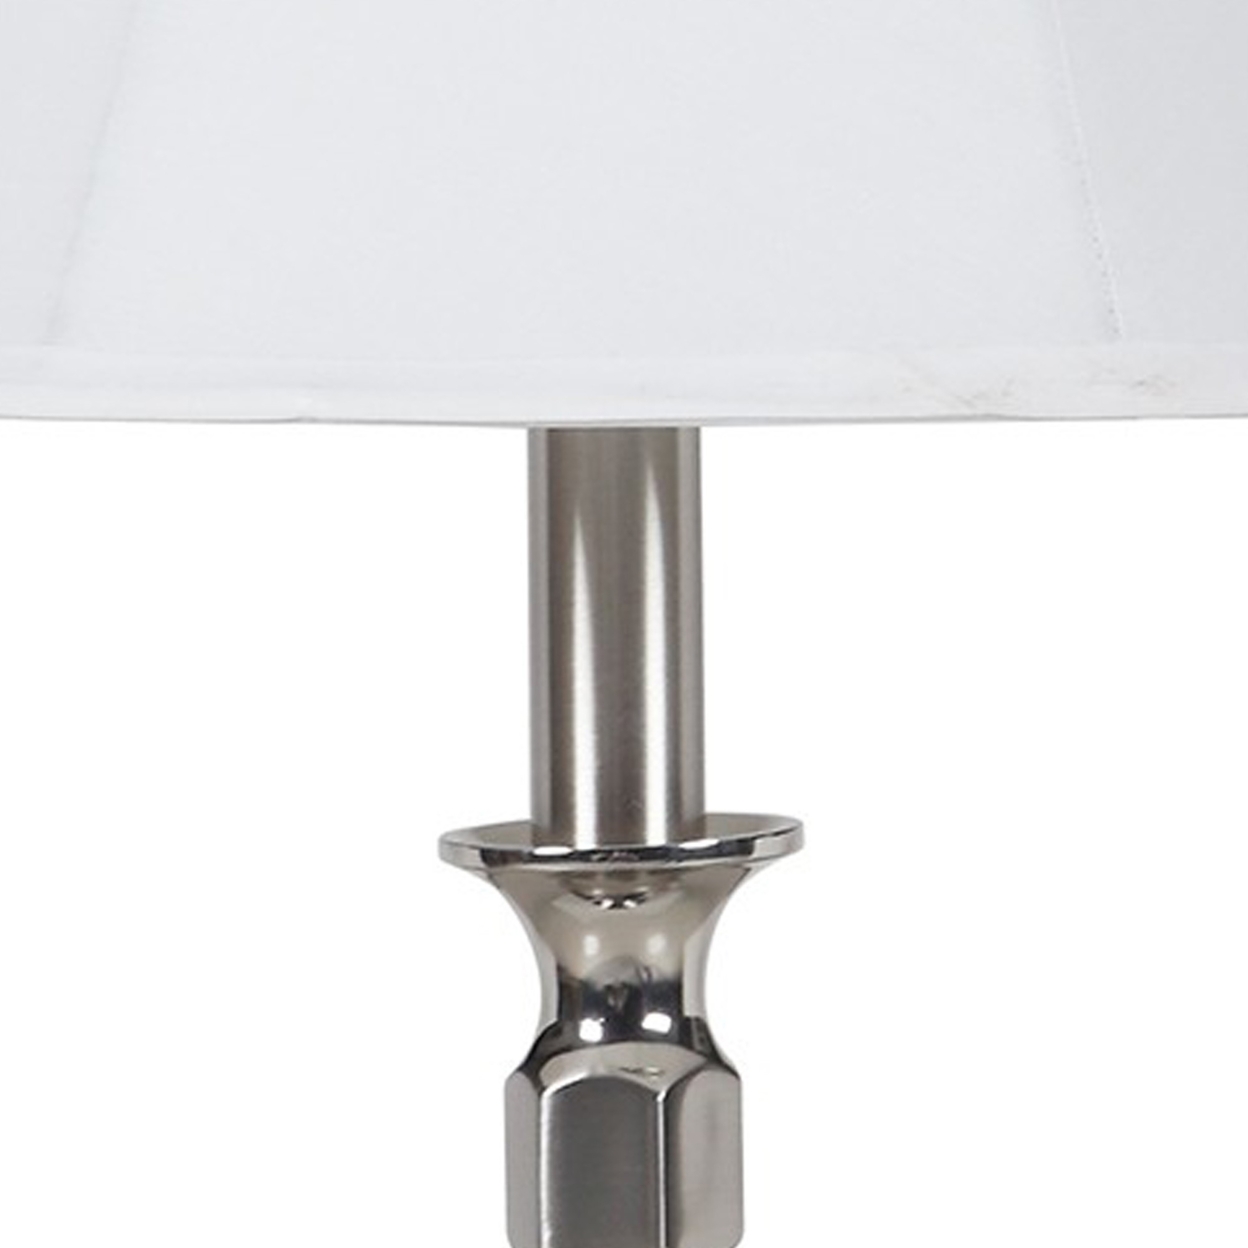 Turned Tubular Metal Body Table Lamp With Empire Shade, Silver- Saltoro Sherpi